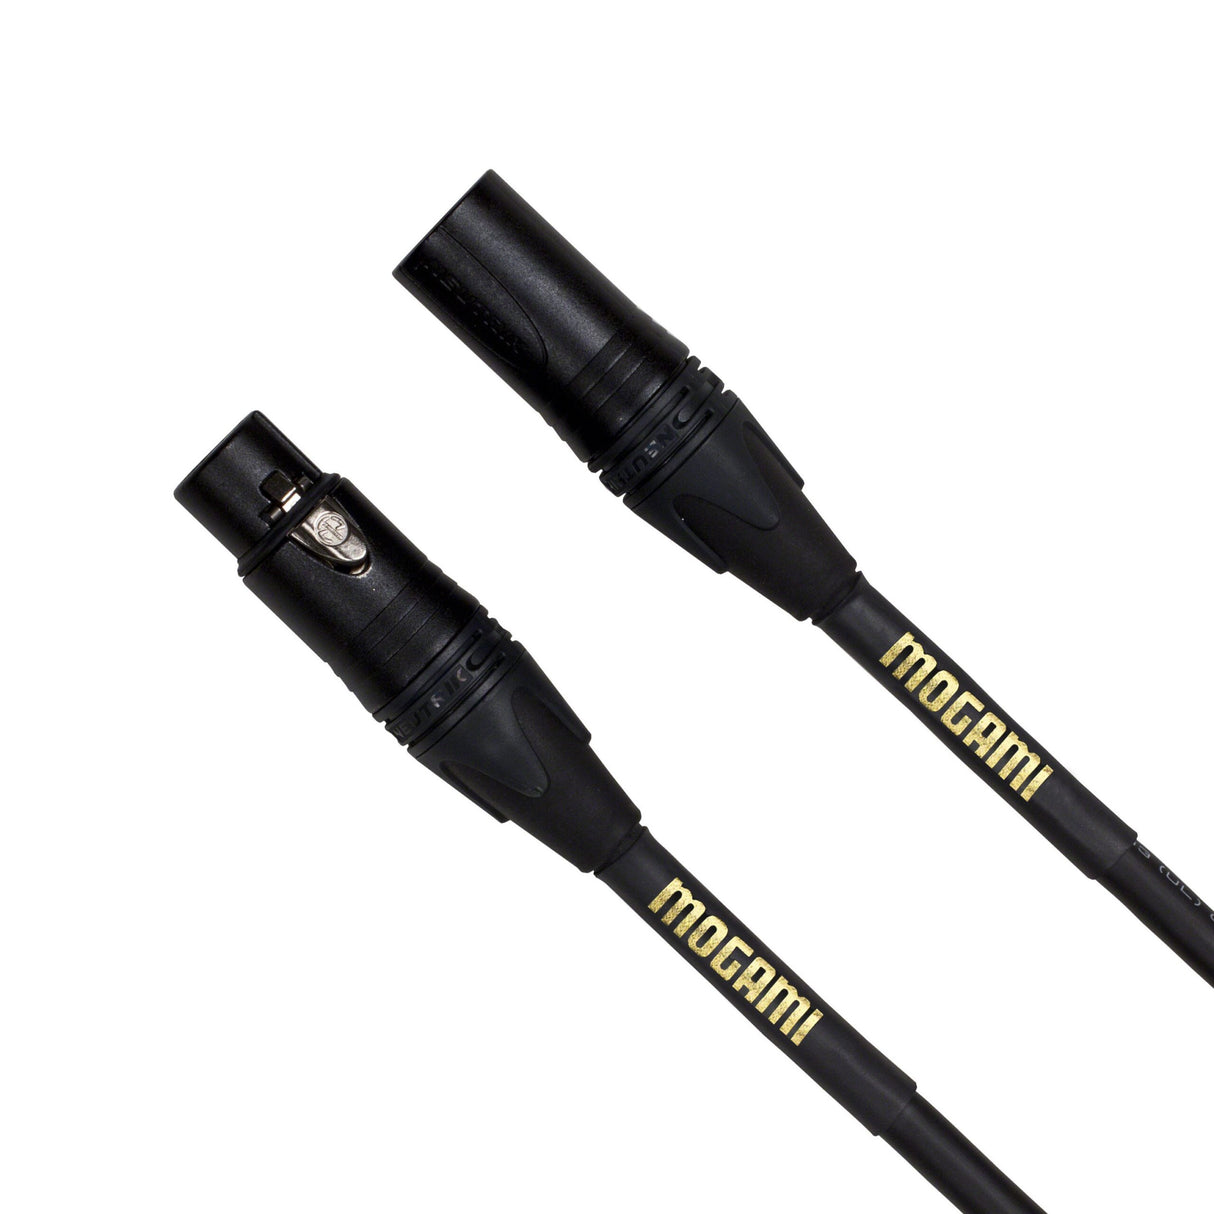 Mogami GOLD AES 100 AES / EBU XLR to XLR Cable, 100-Feet